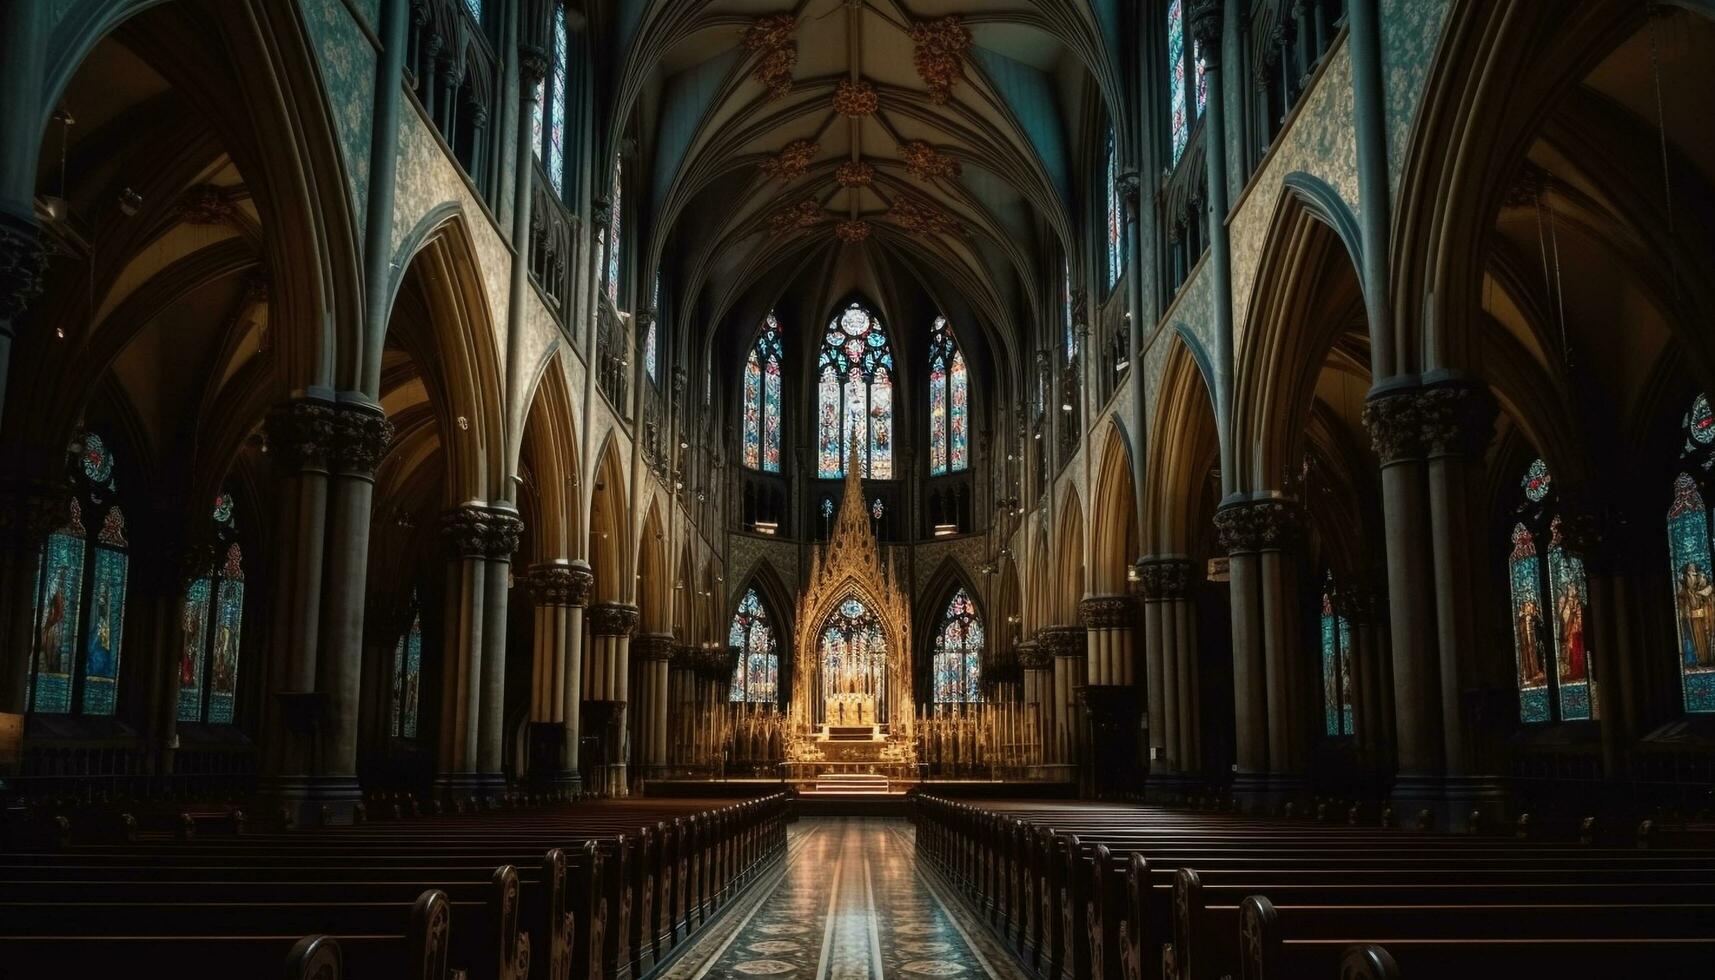 dentro a majestoso gótico estilo basílica, iluminado manchado vidro janelas iluminar história gerado de ai foto